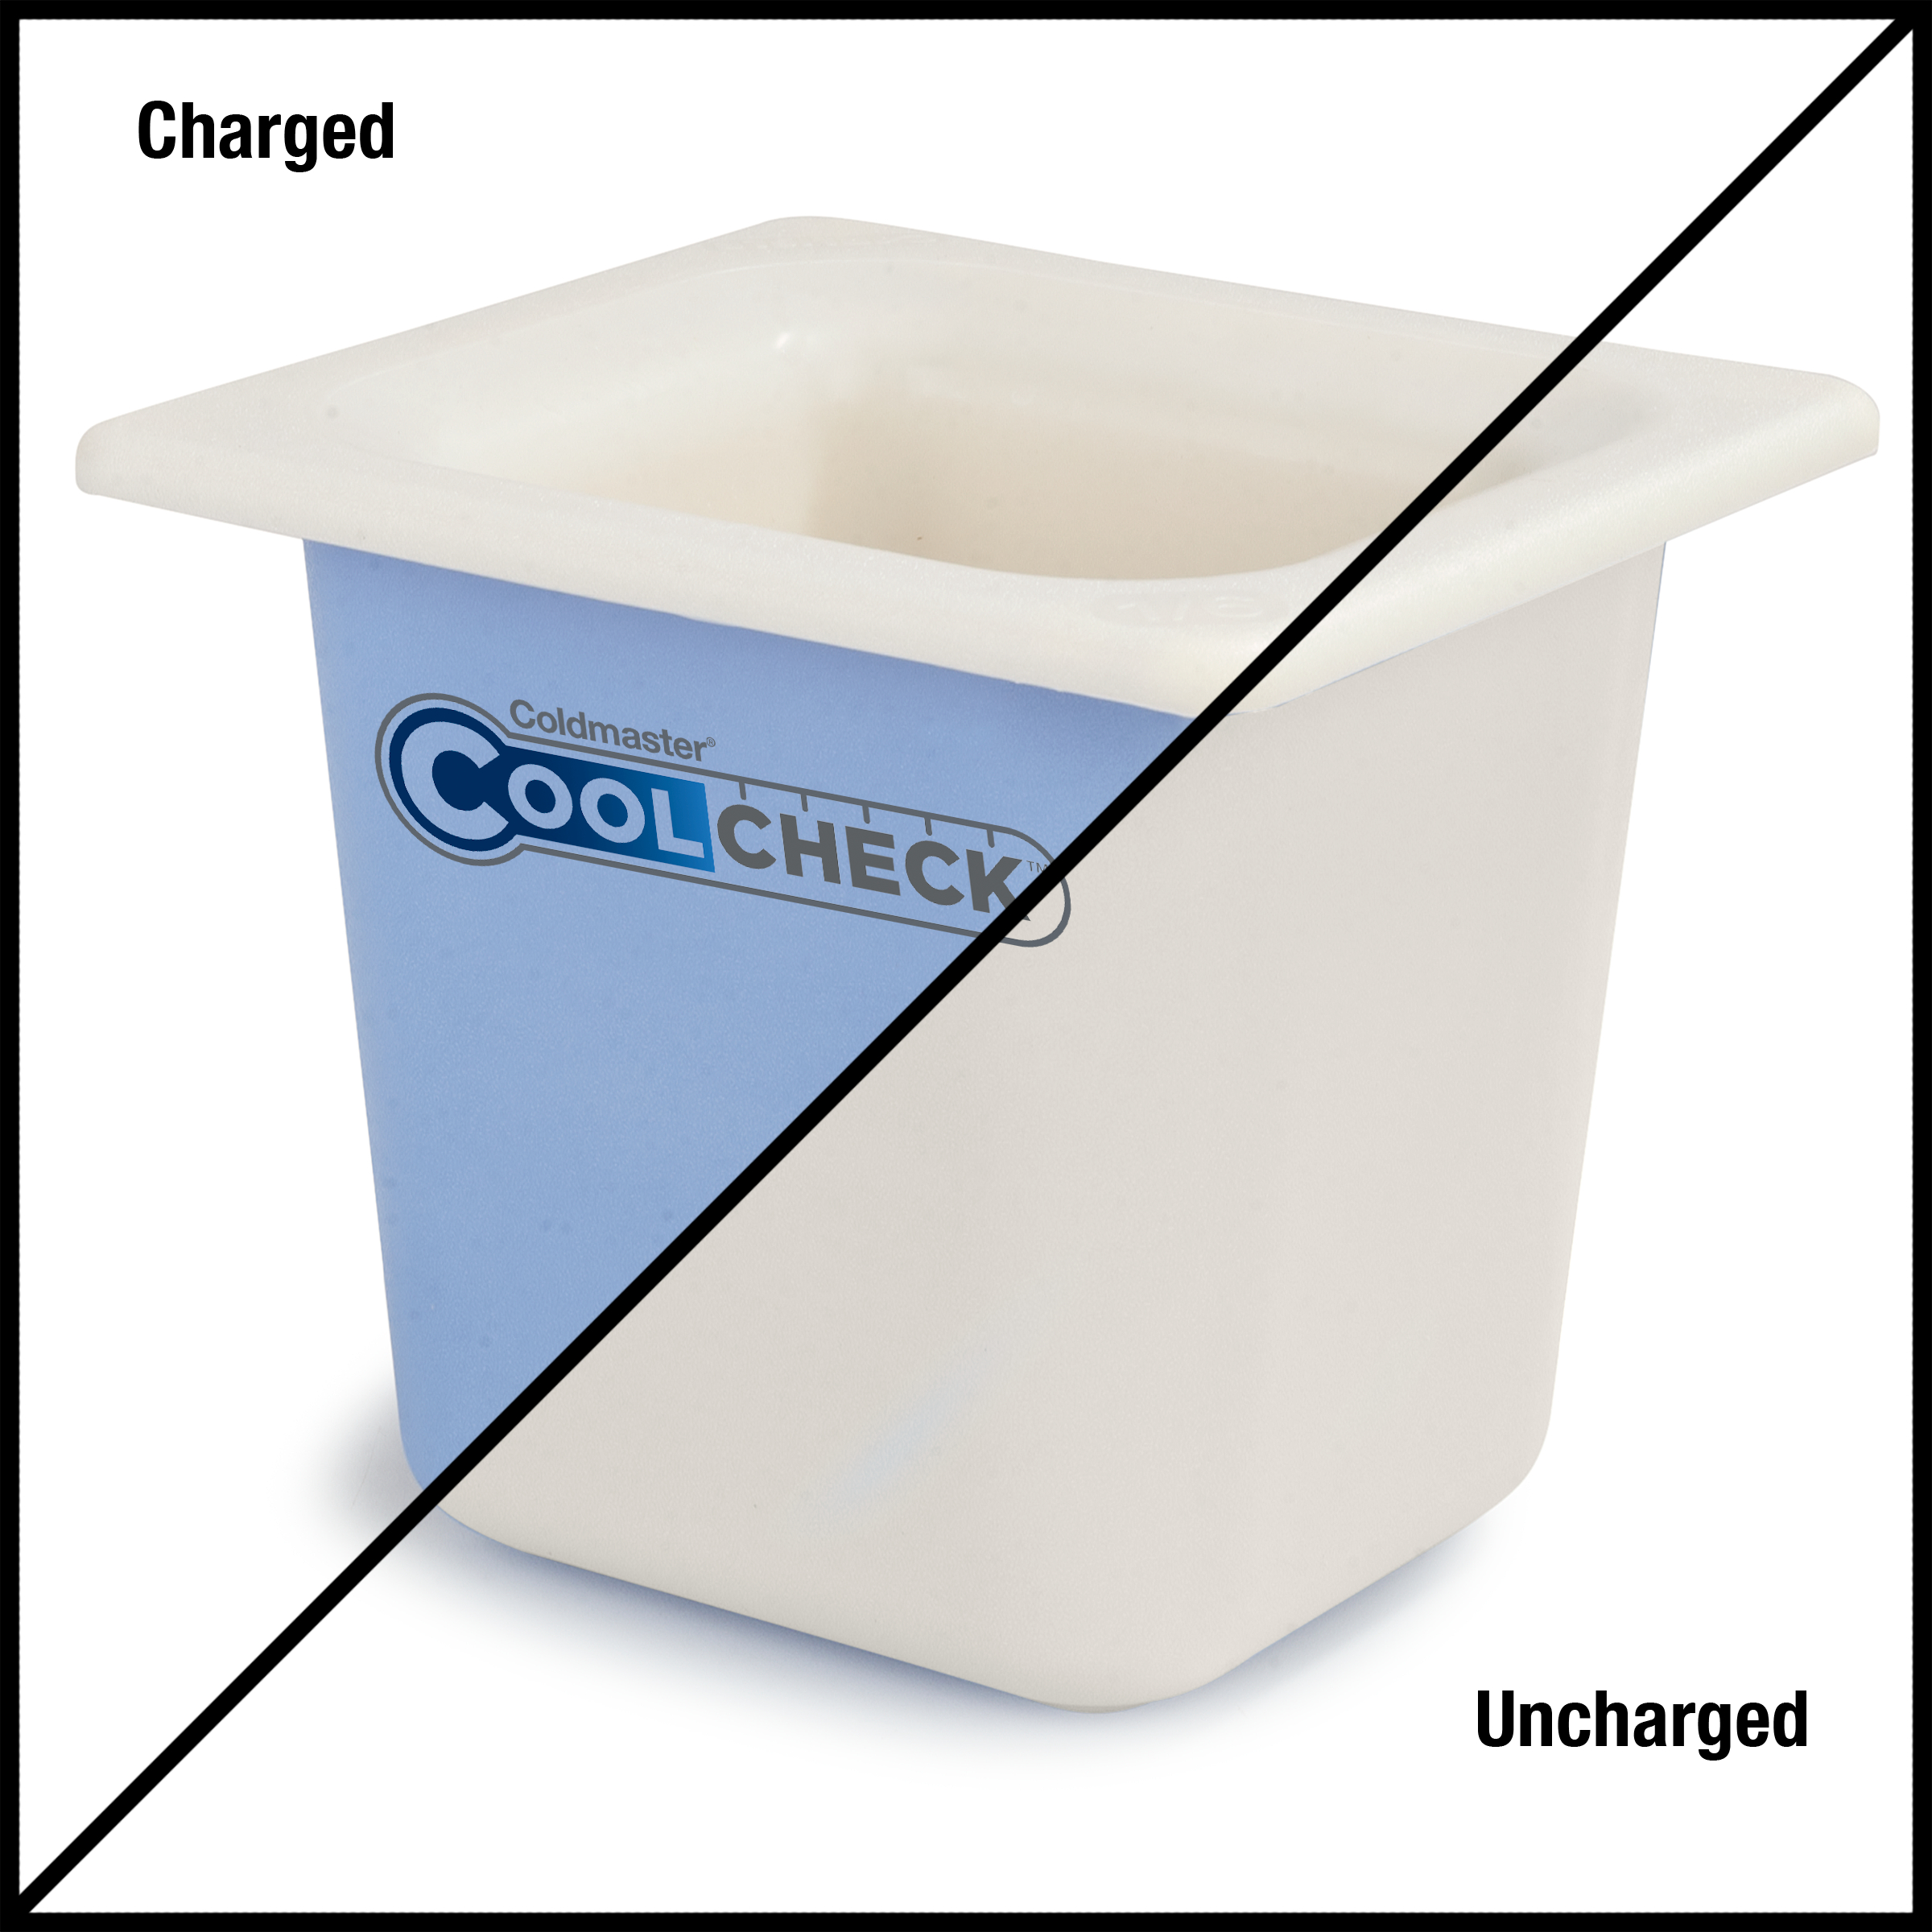 Coldmaster CoolCheck 6 D Sixth-size Food Pan 1.6 qt  - White/Blue